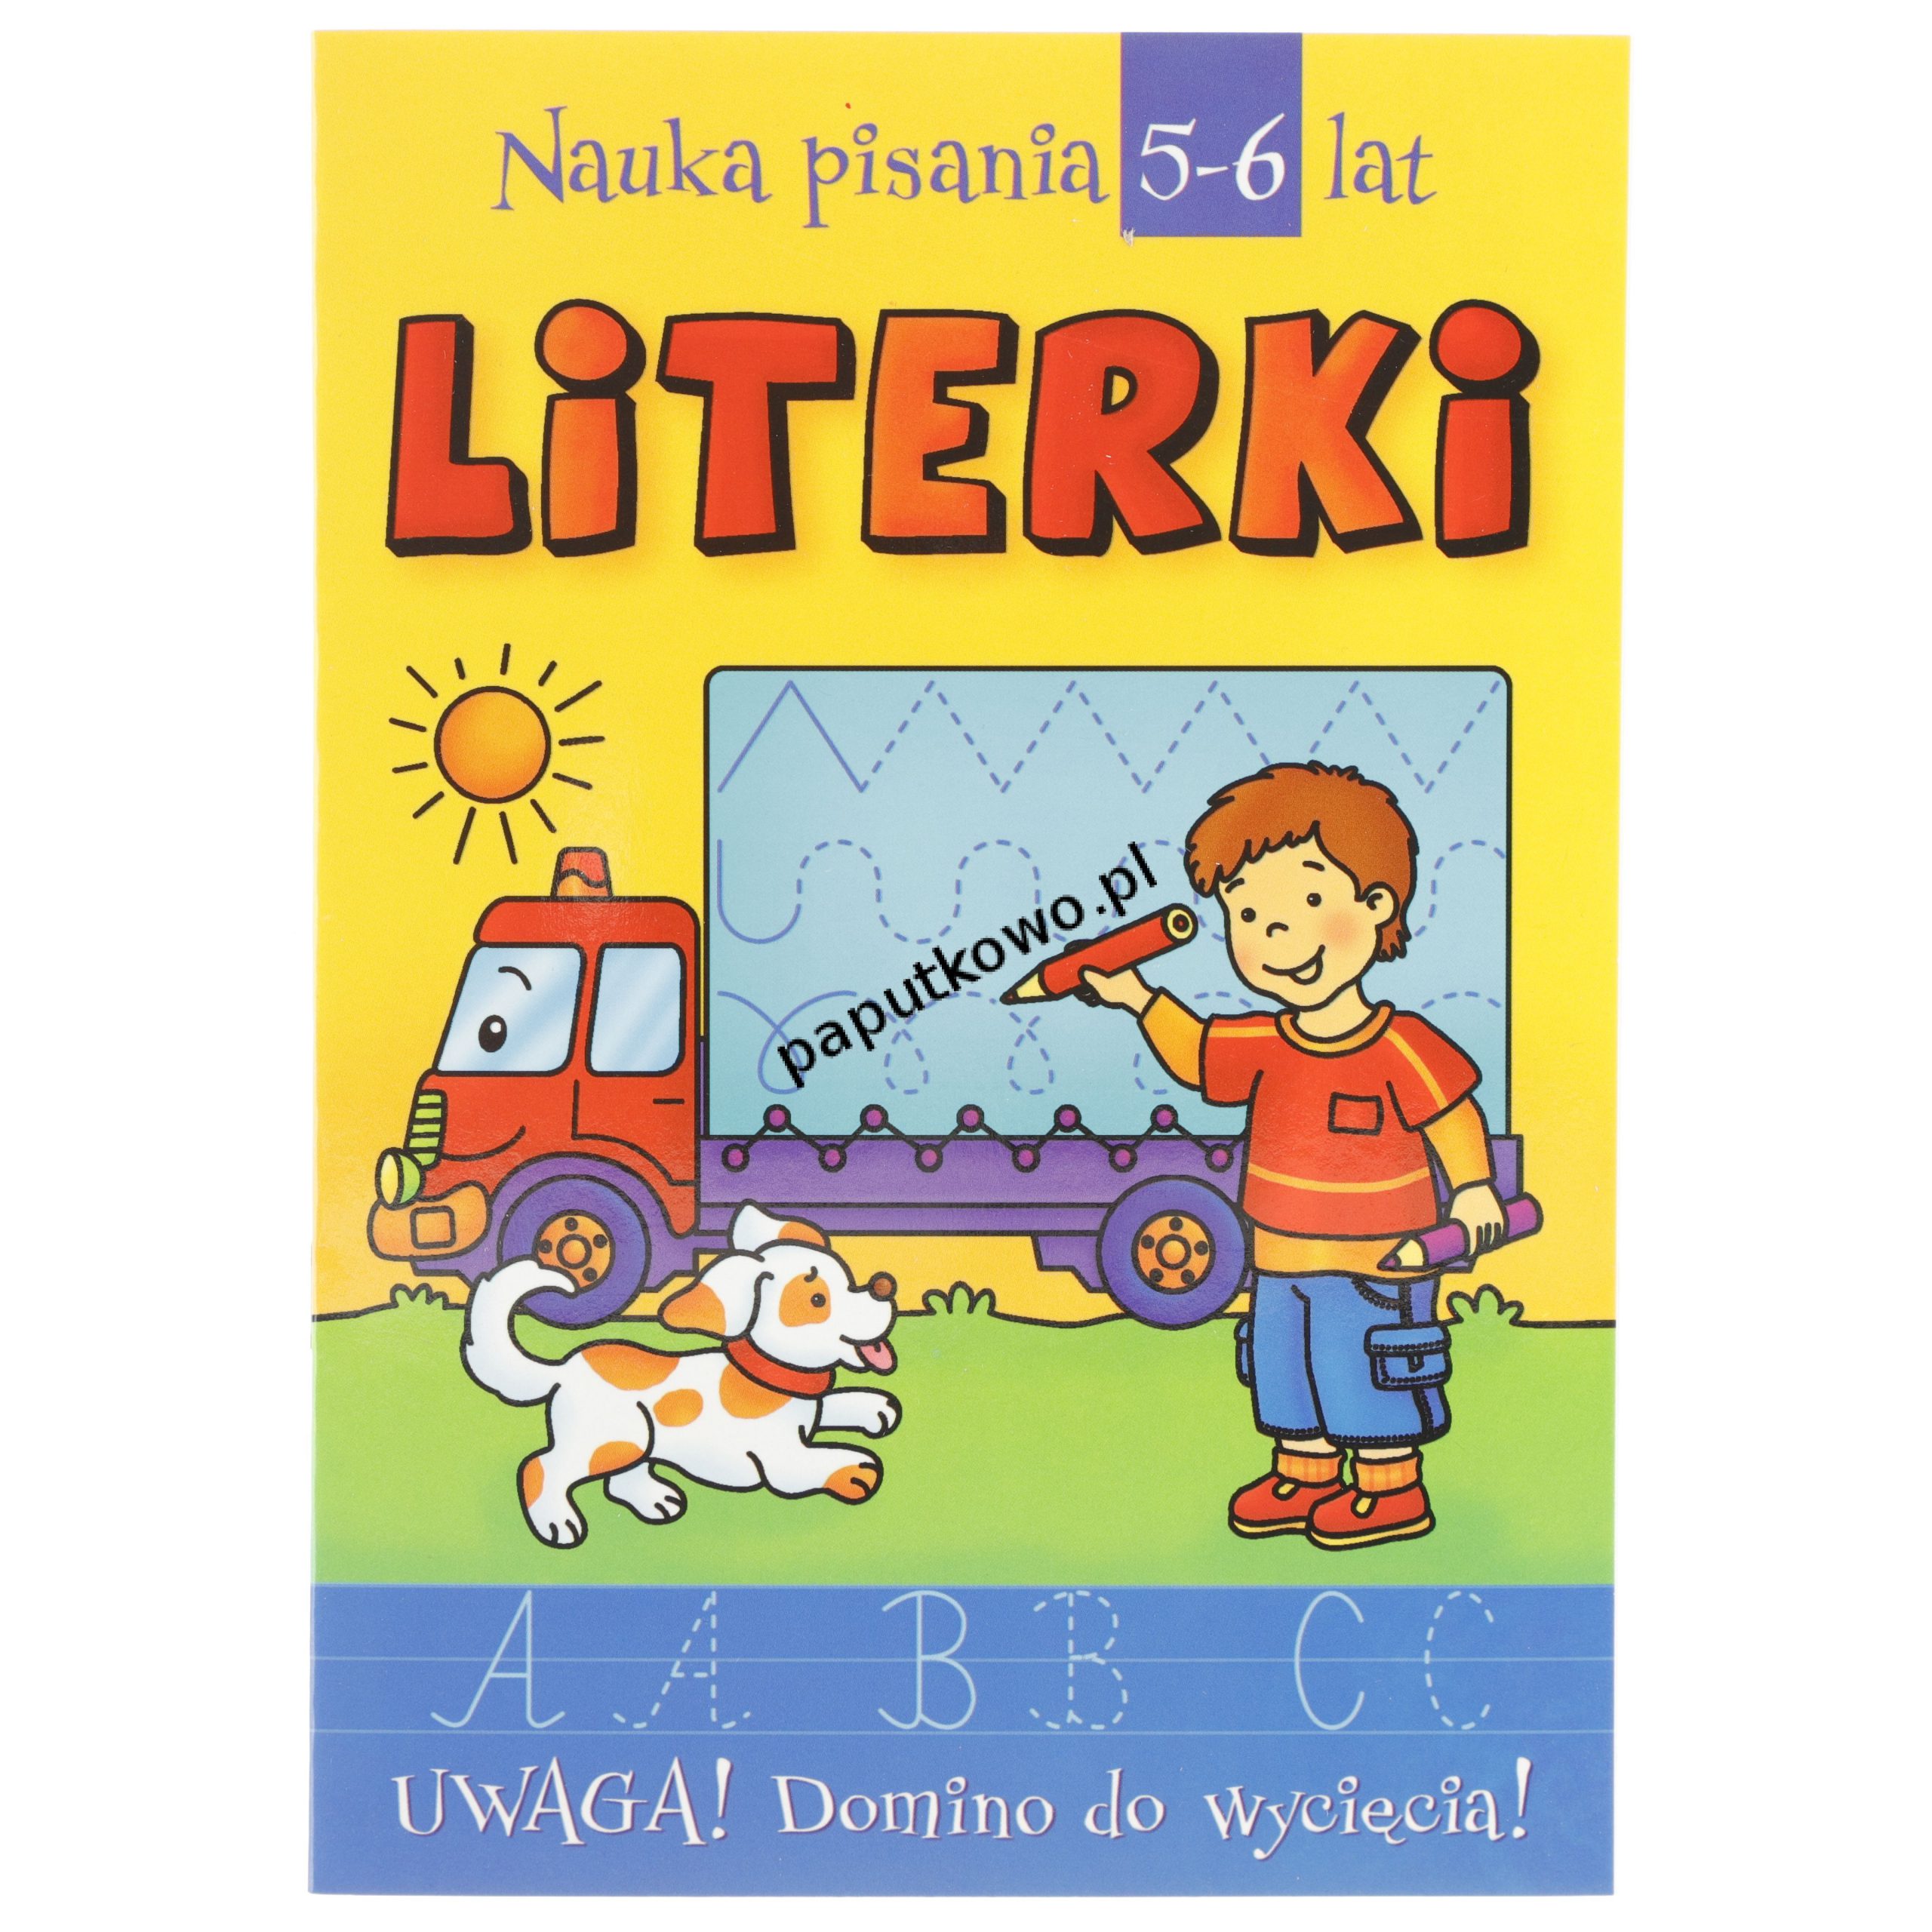 Książka dla dzieci Literka Literki 5-6 lat